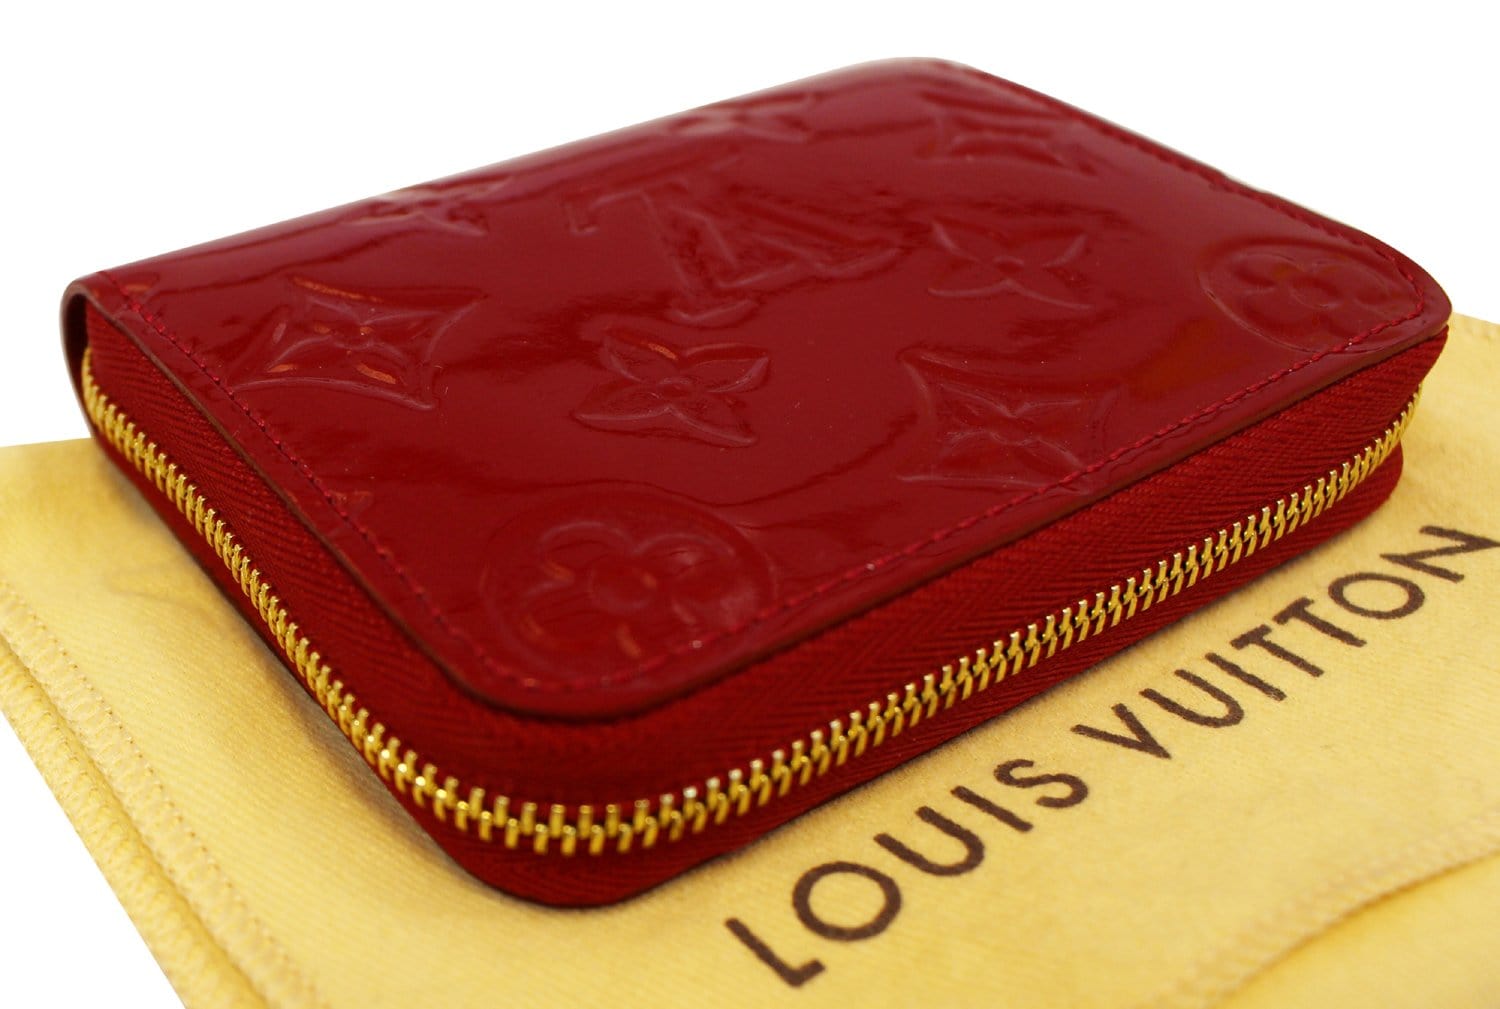 Louis Vuitton Leather Compact Wallet